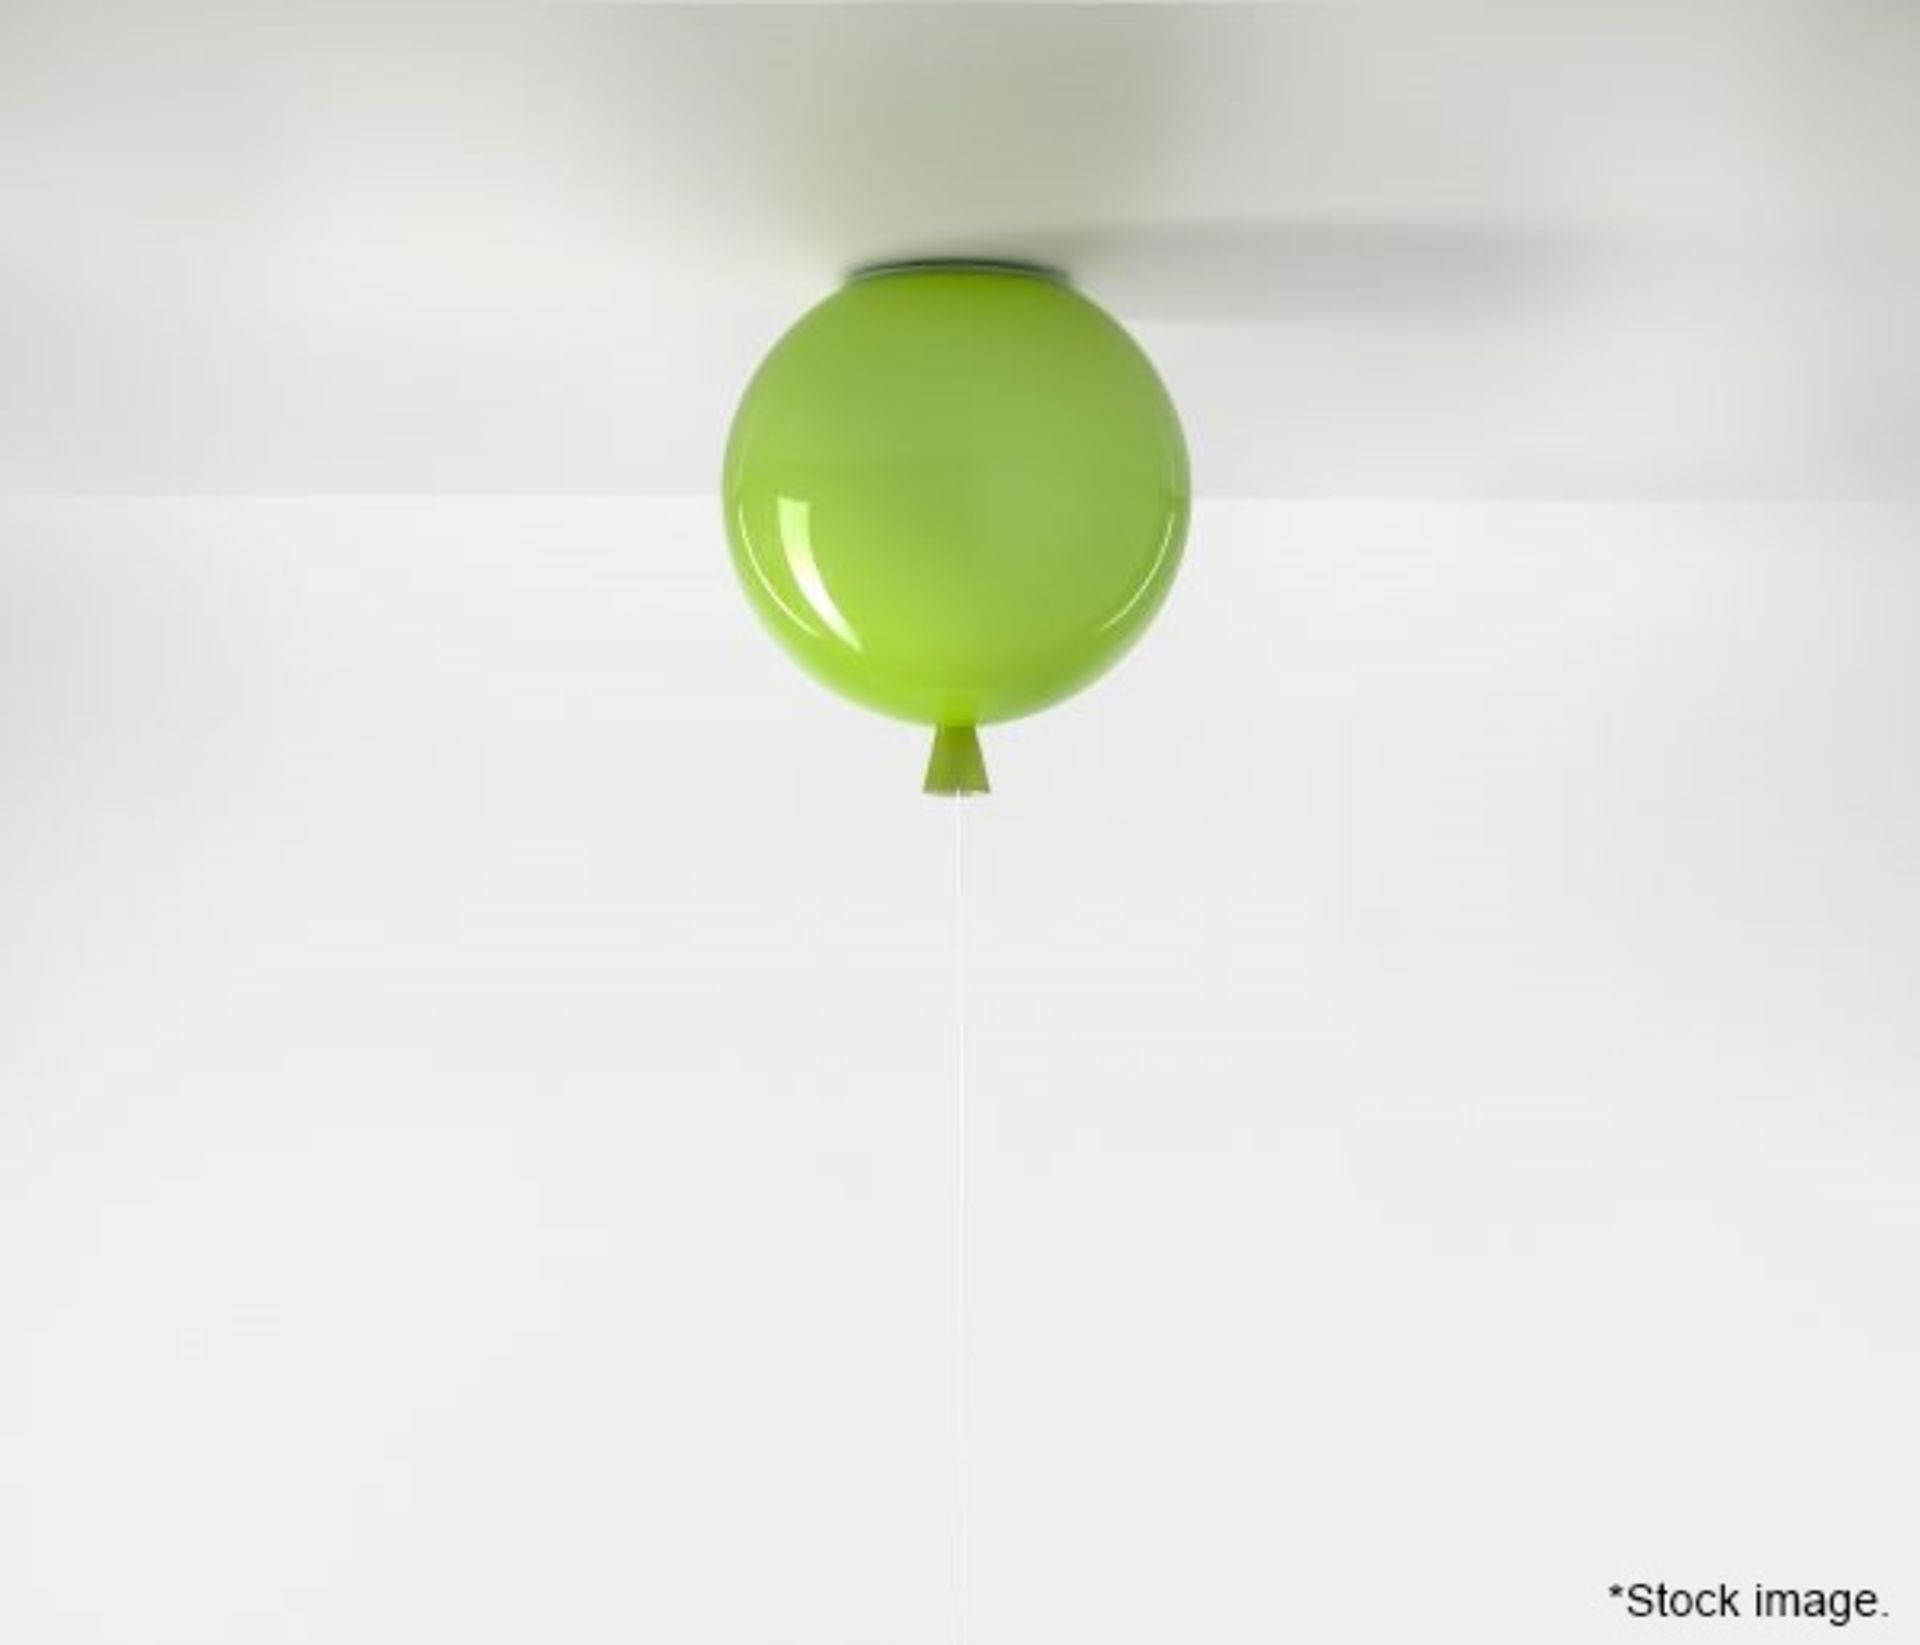 1 x BROKIS / BORIS KLIMEK "Memory" Balloon-shaped Designer Glass Light Fitting, Green - RRP £390.00 - Image 3 of 10